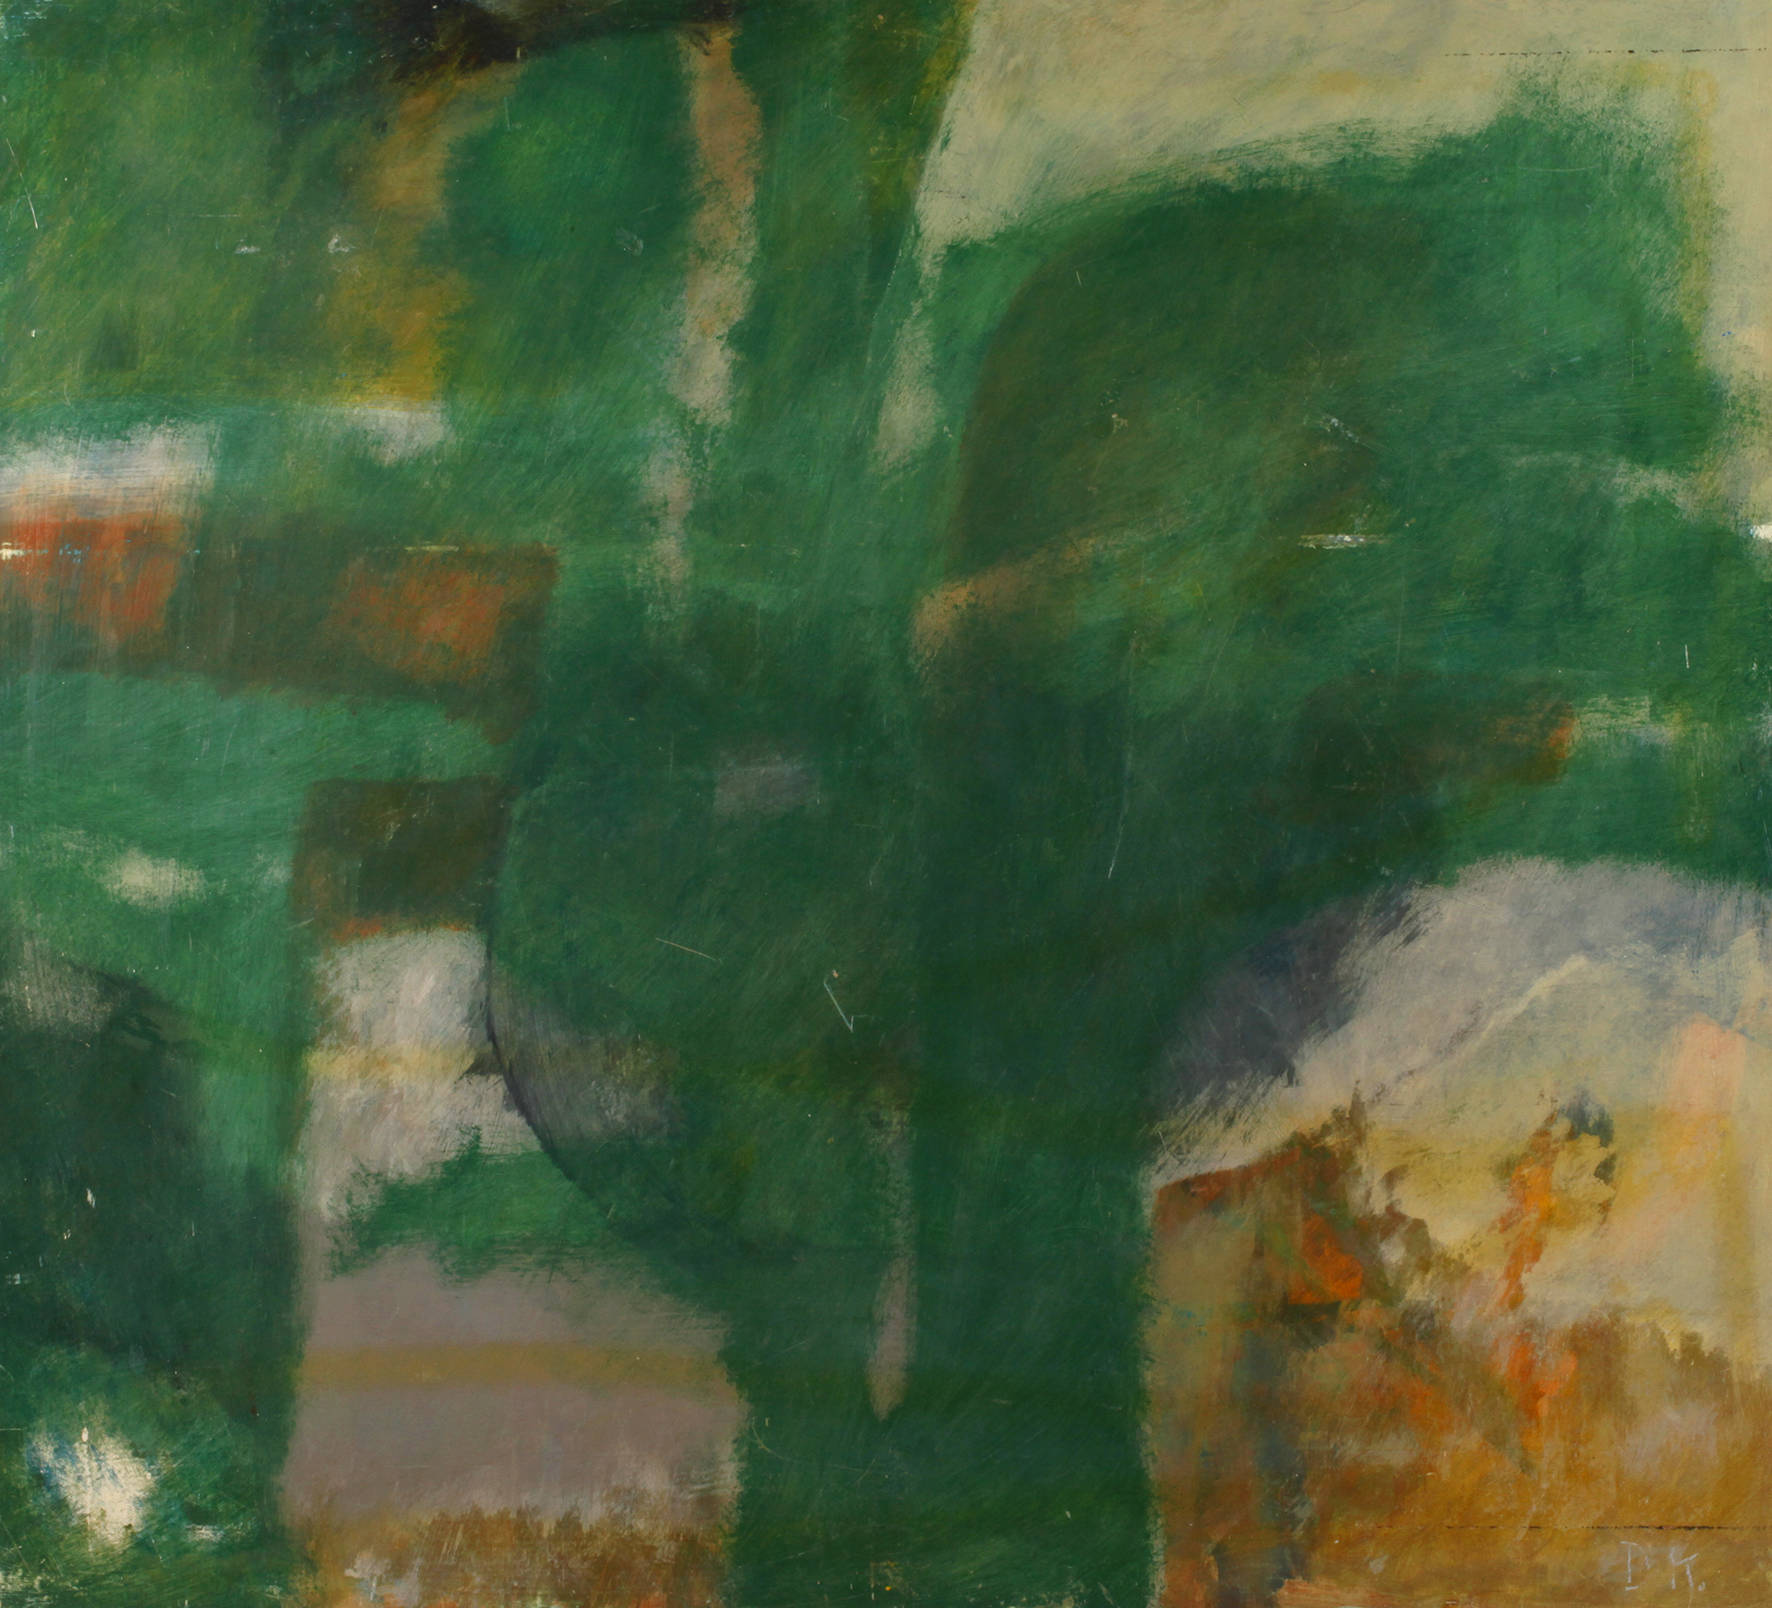 Abstraktion in Grün